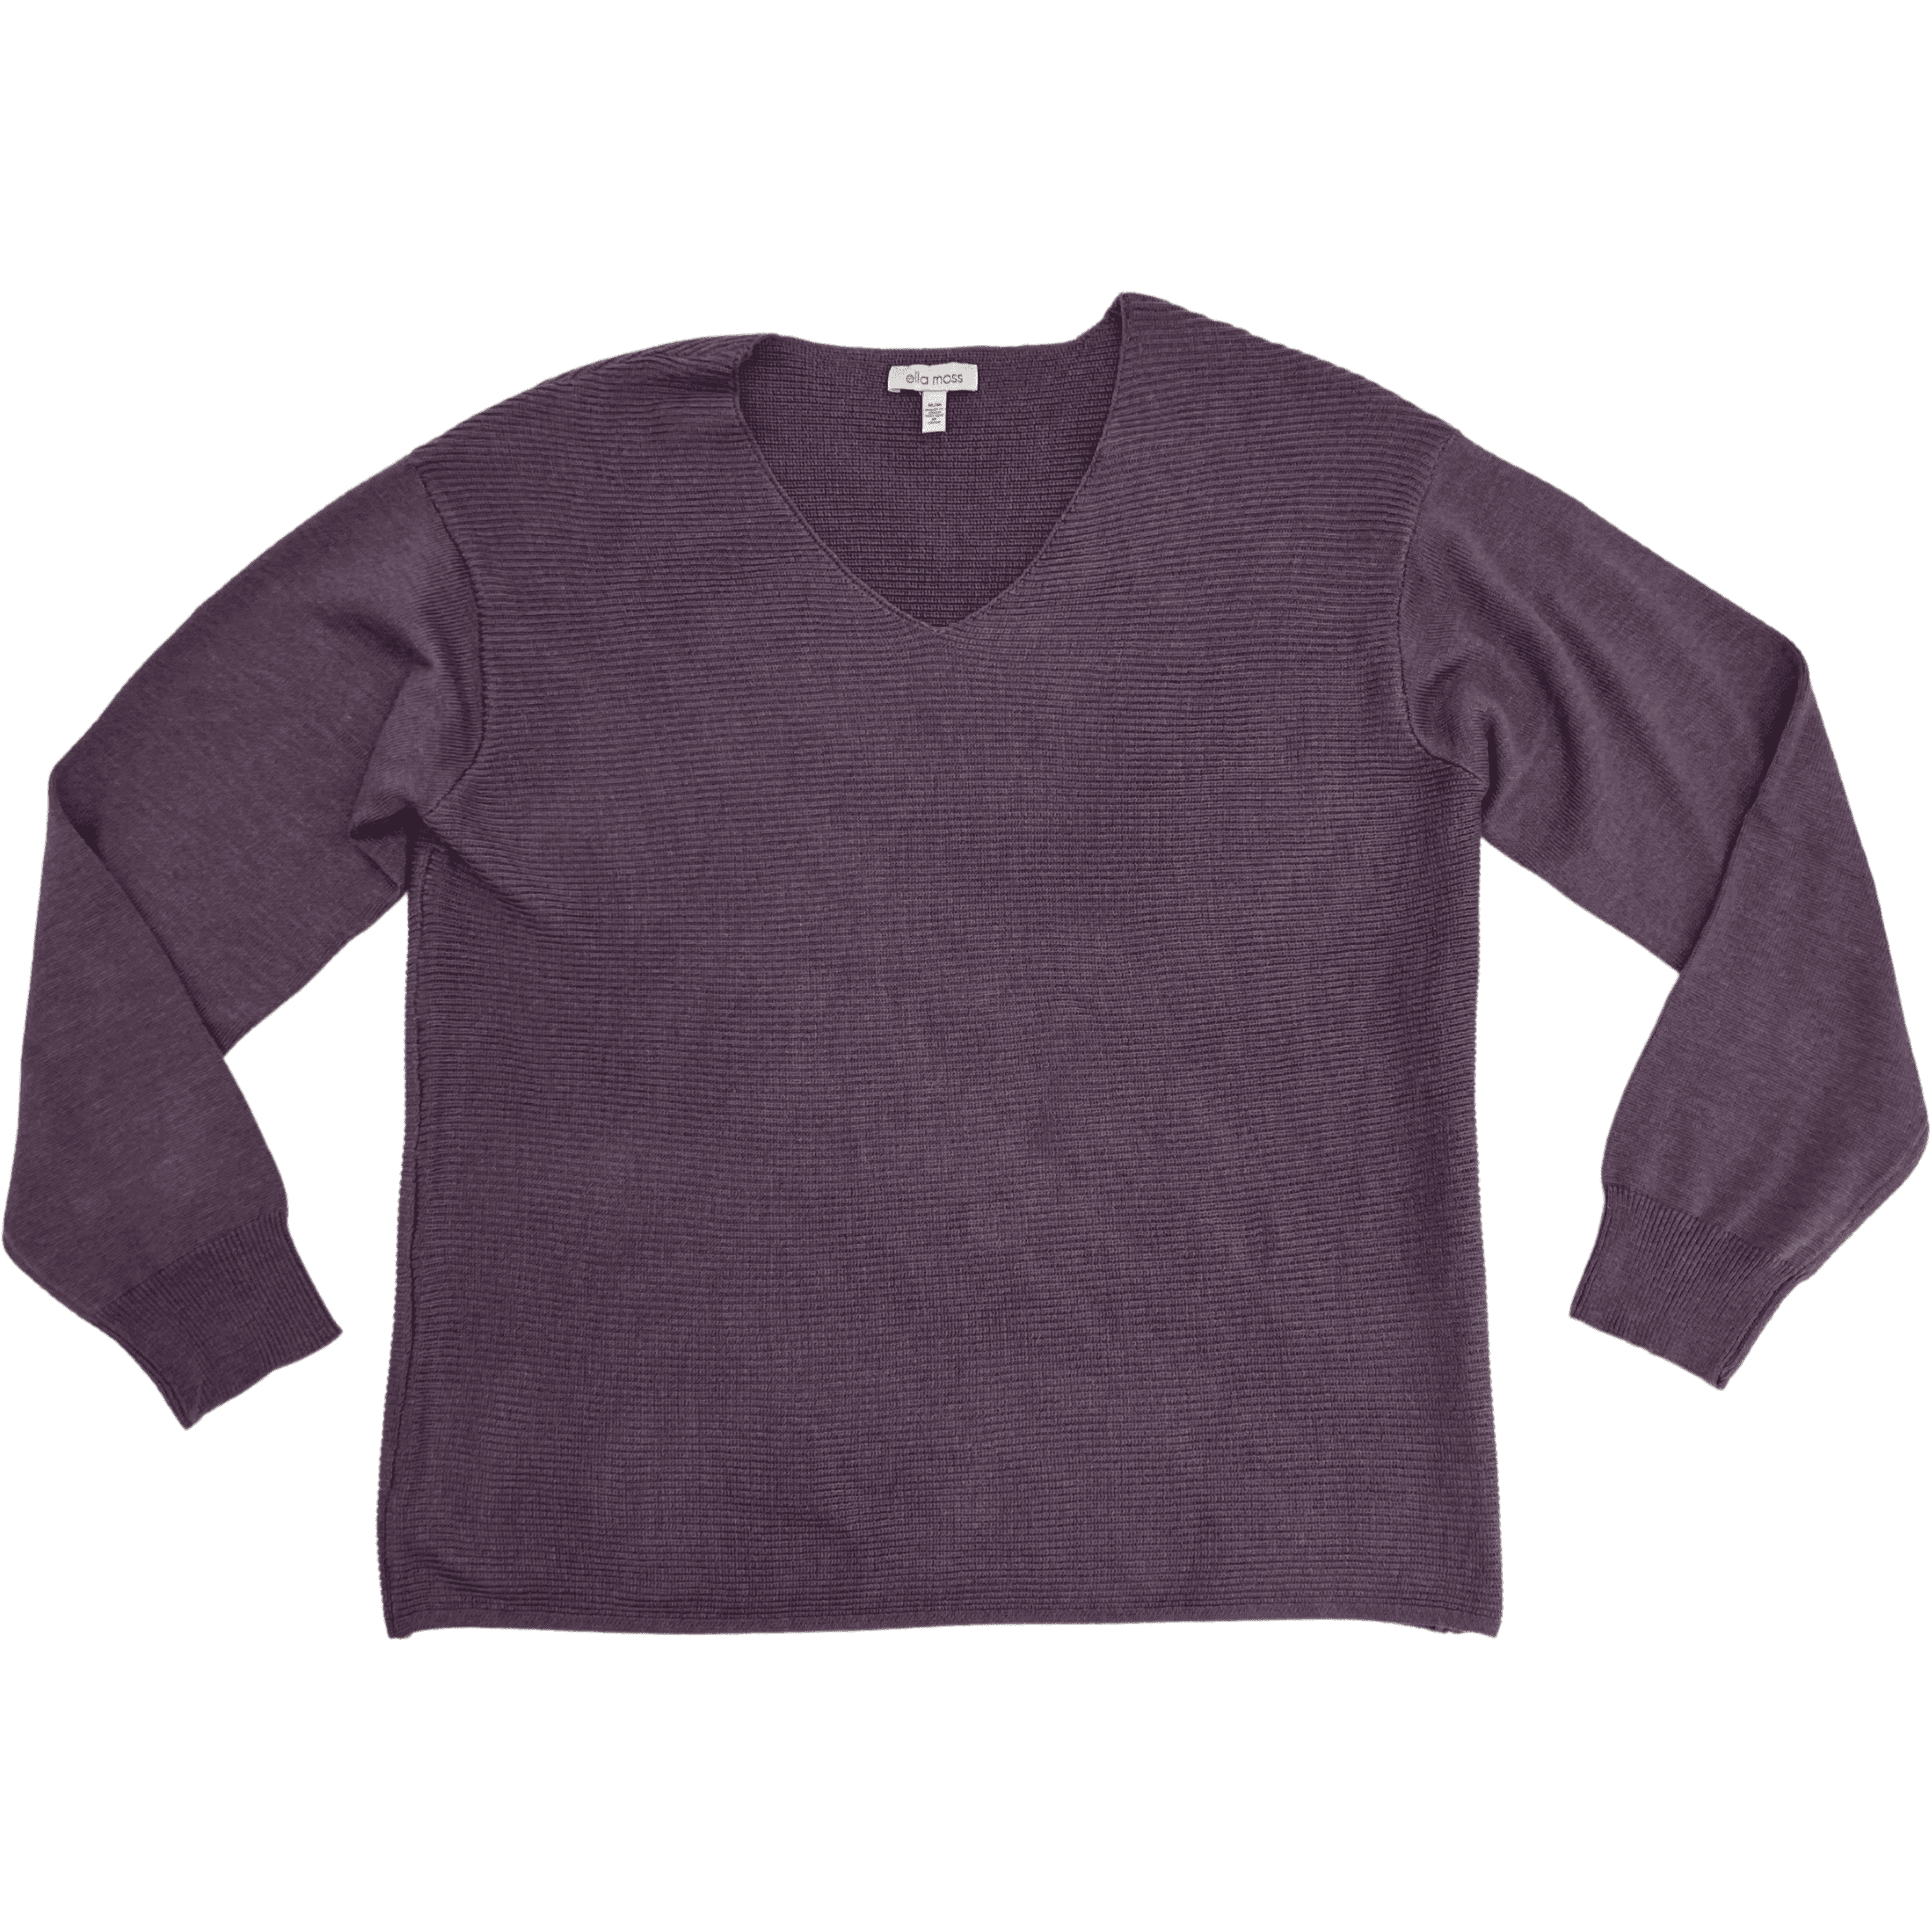 Ella Moss / Women's Pullover Sweater / Size M / Purple **No Tags**